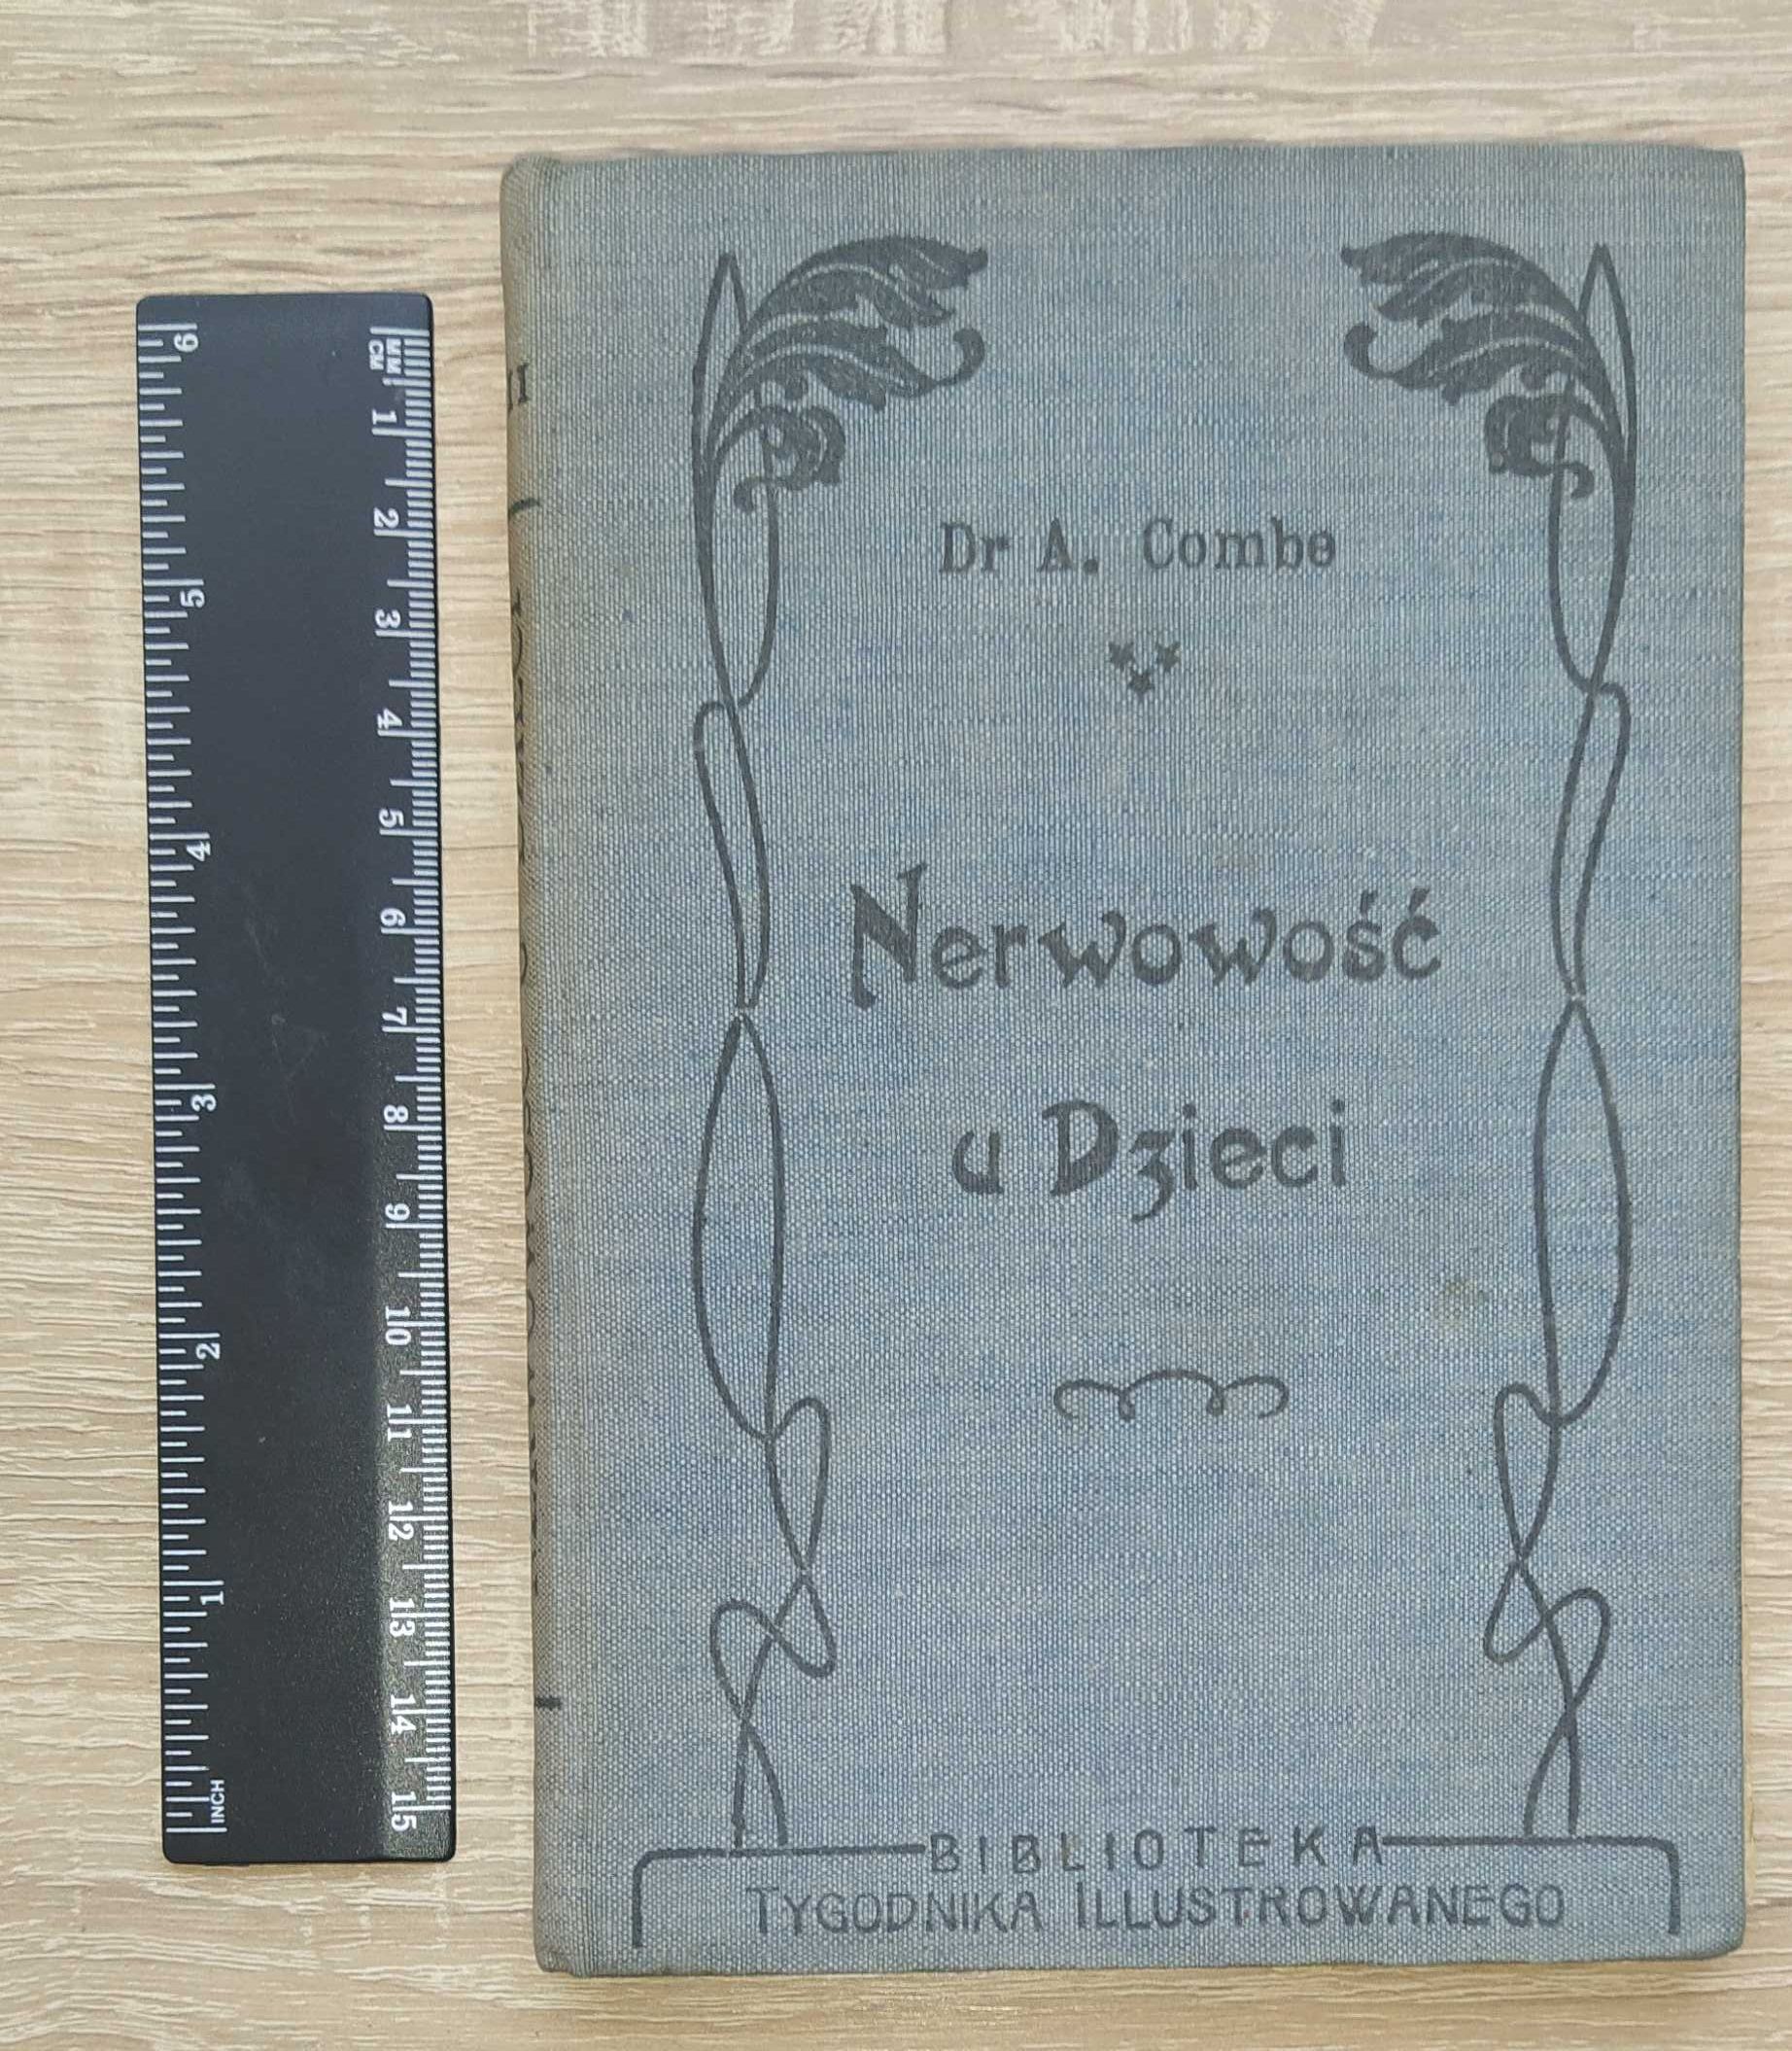 Книга Dr. A. Comhe  "Nerwowosc u Dzieci"  1904 г.  (на польском языке)